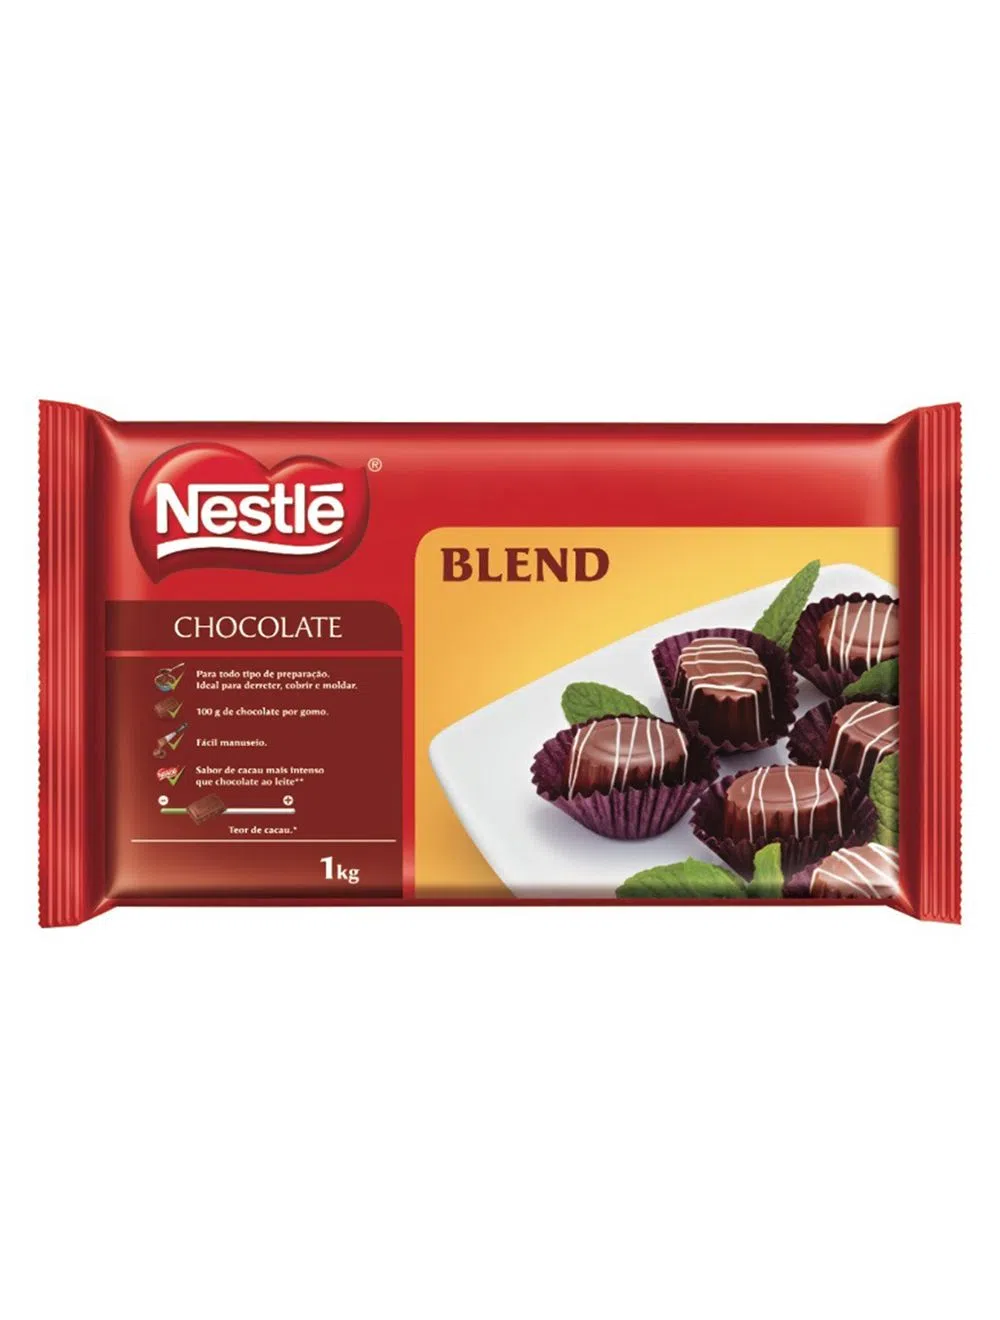 CHOCOLATE BARRA NESTLÉ 1KG BLEND